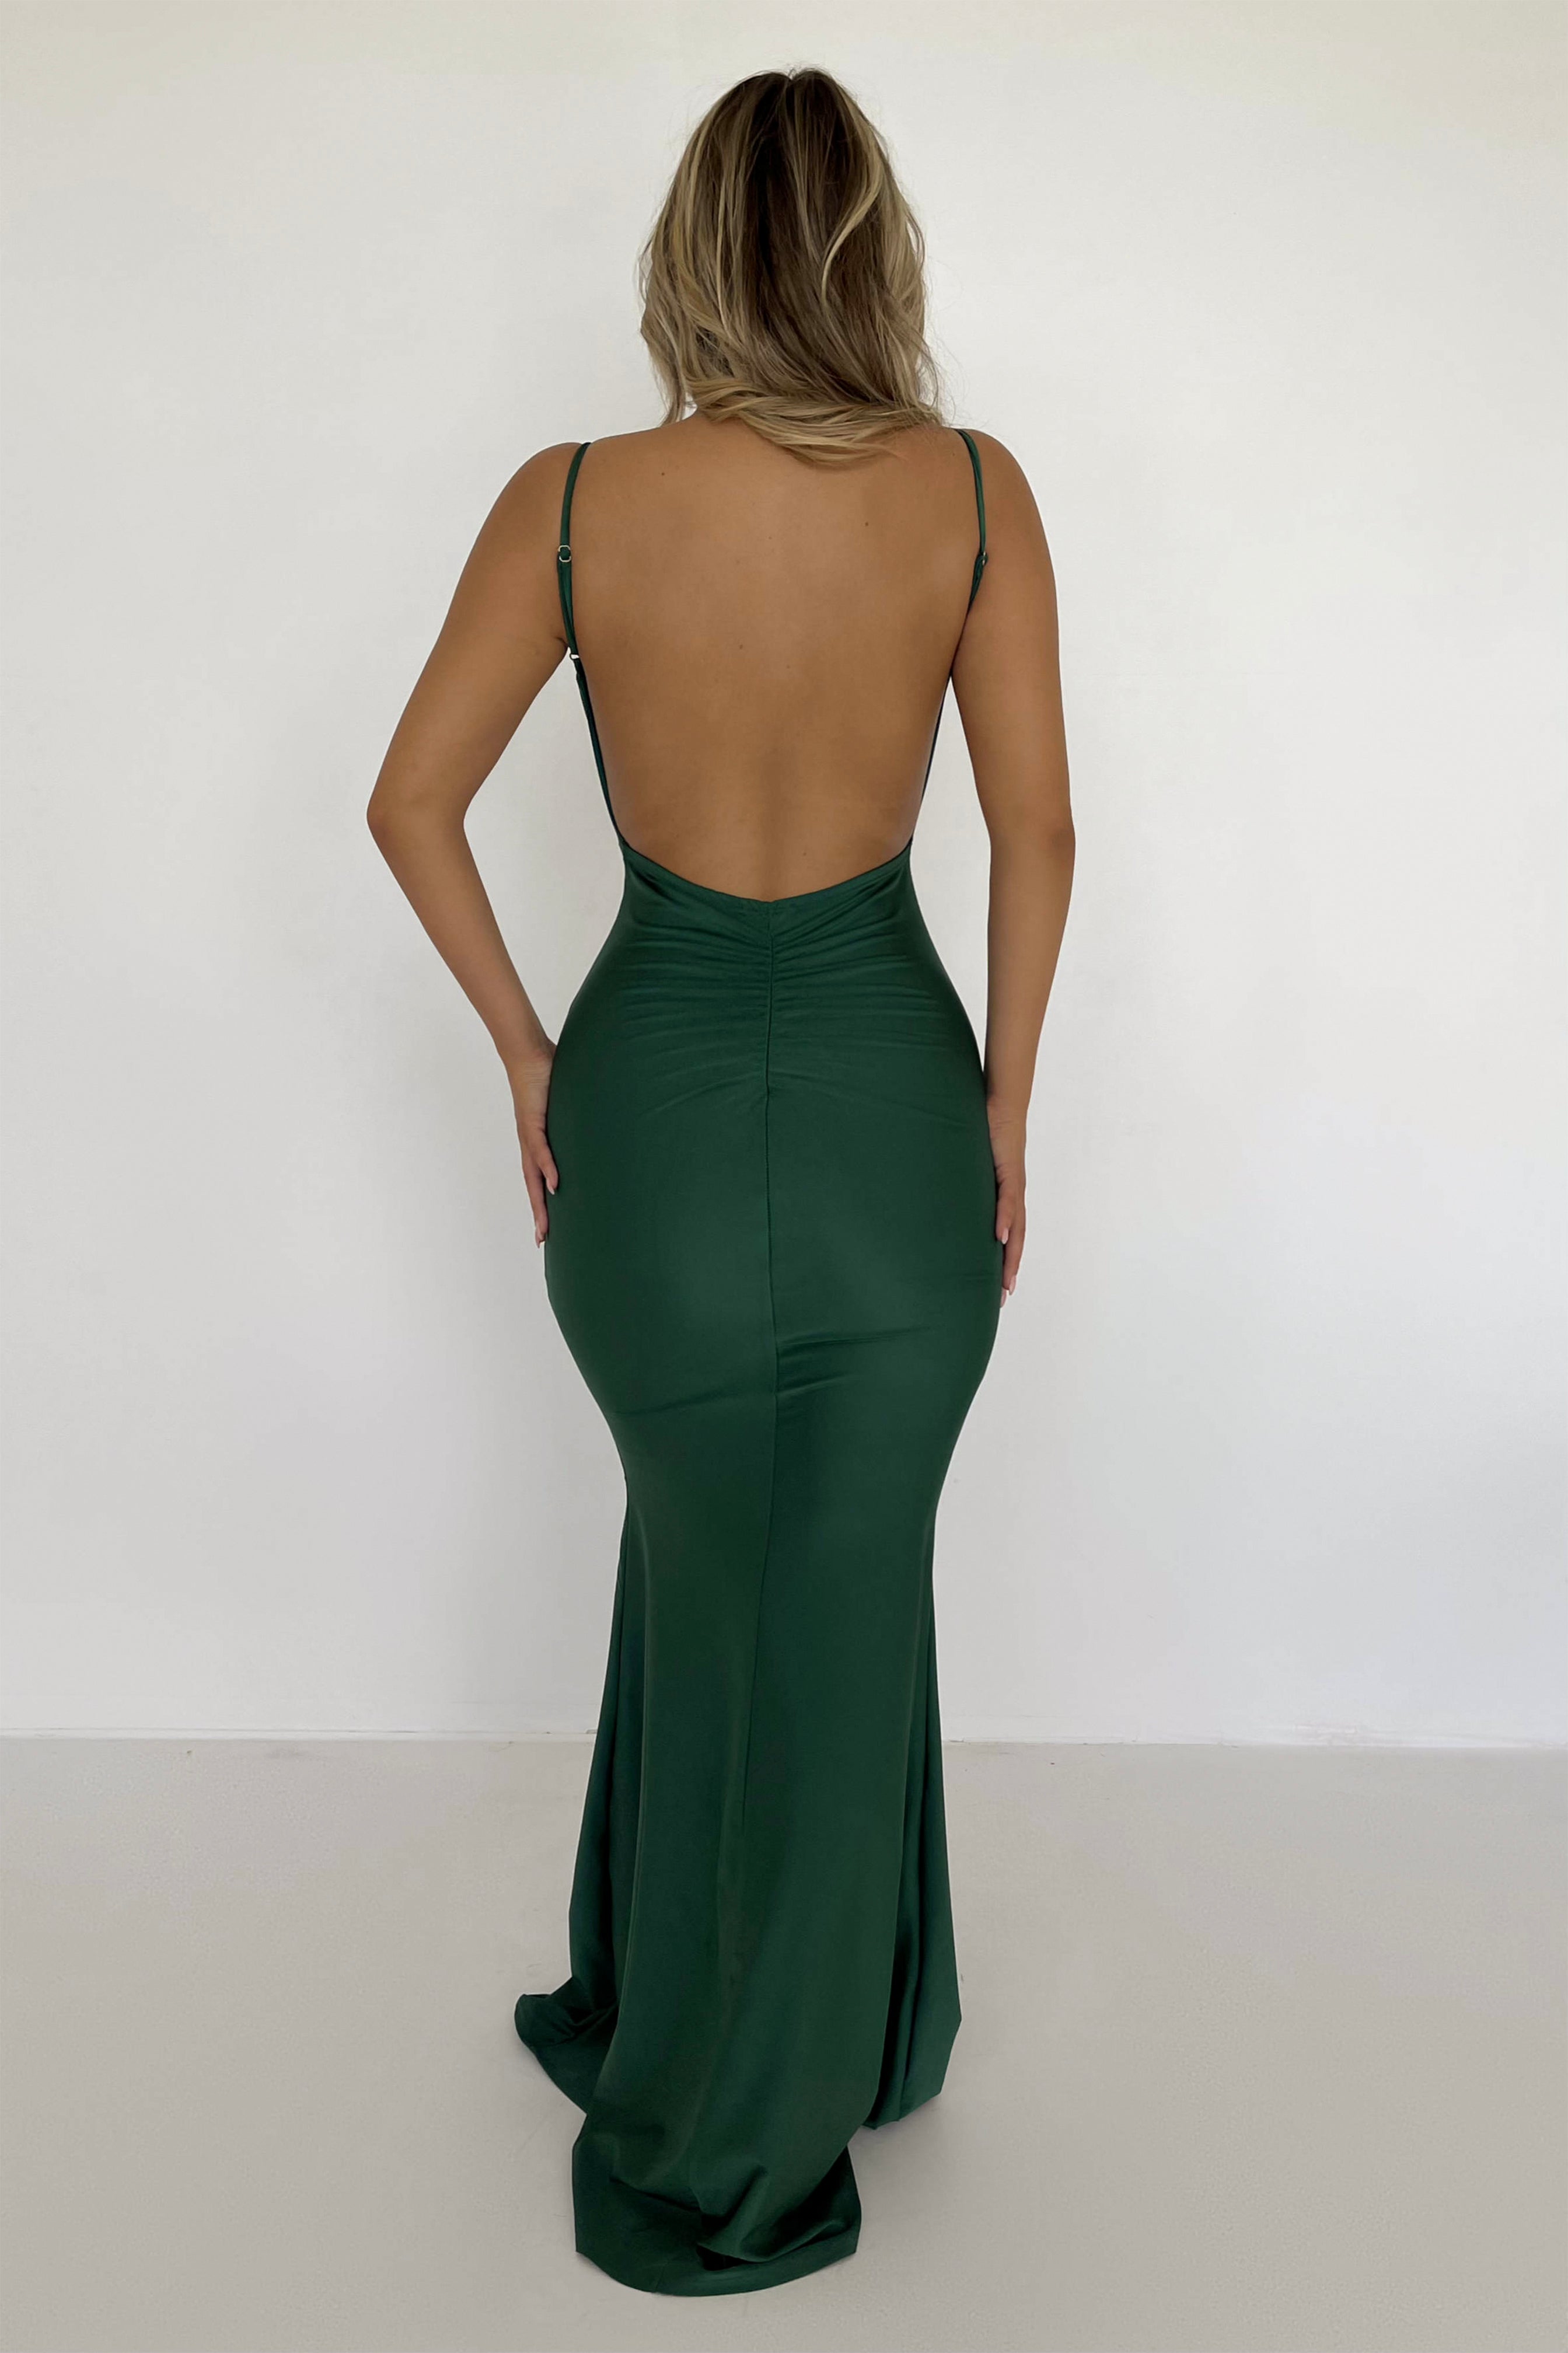 Umbra Hunter Green Dress